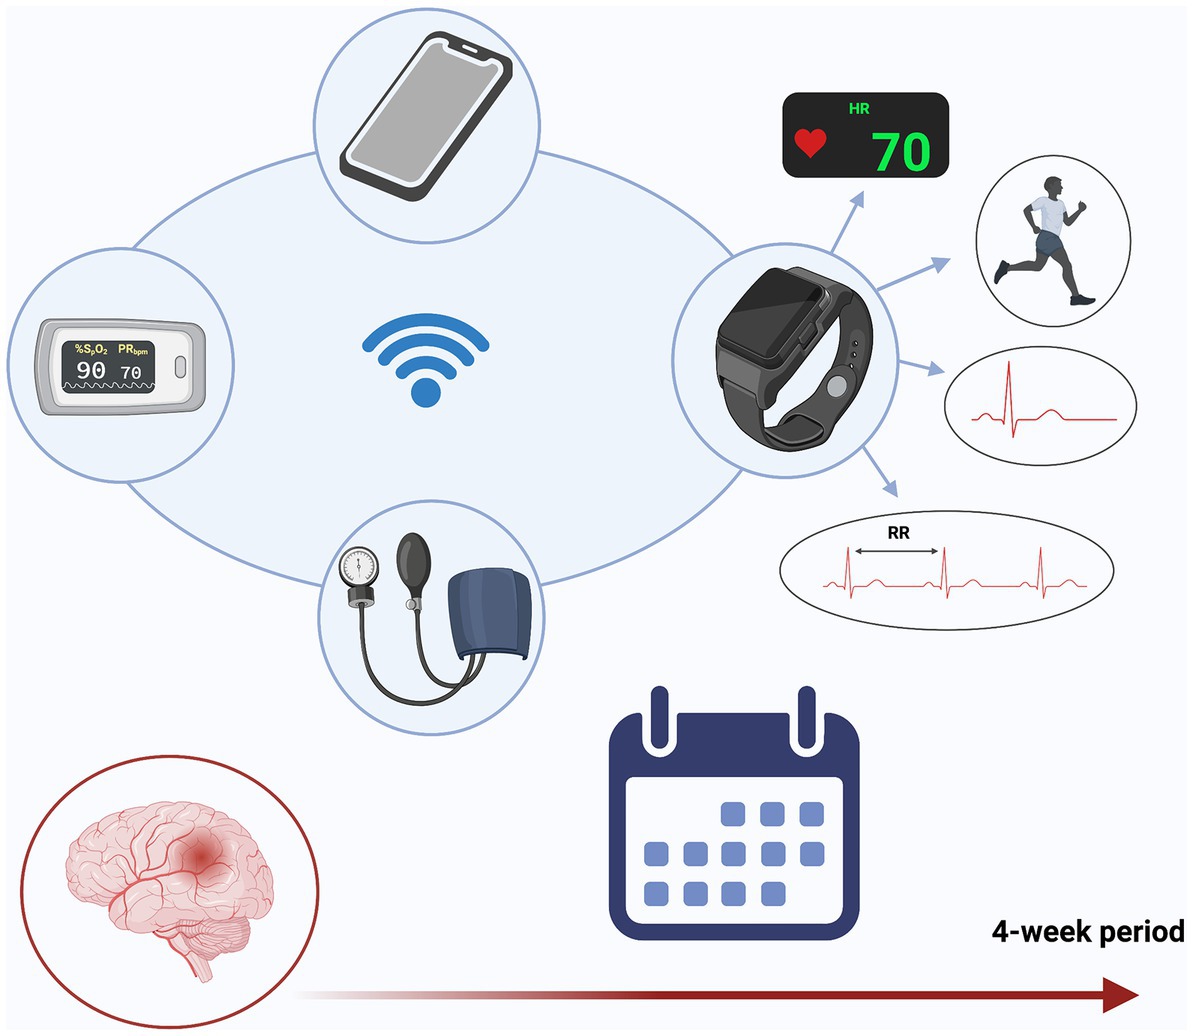 iHealth Feel Wireless Blood Pressure Monitor - Virtual Care Store